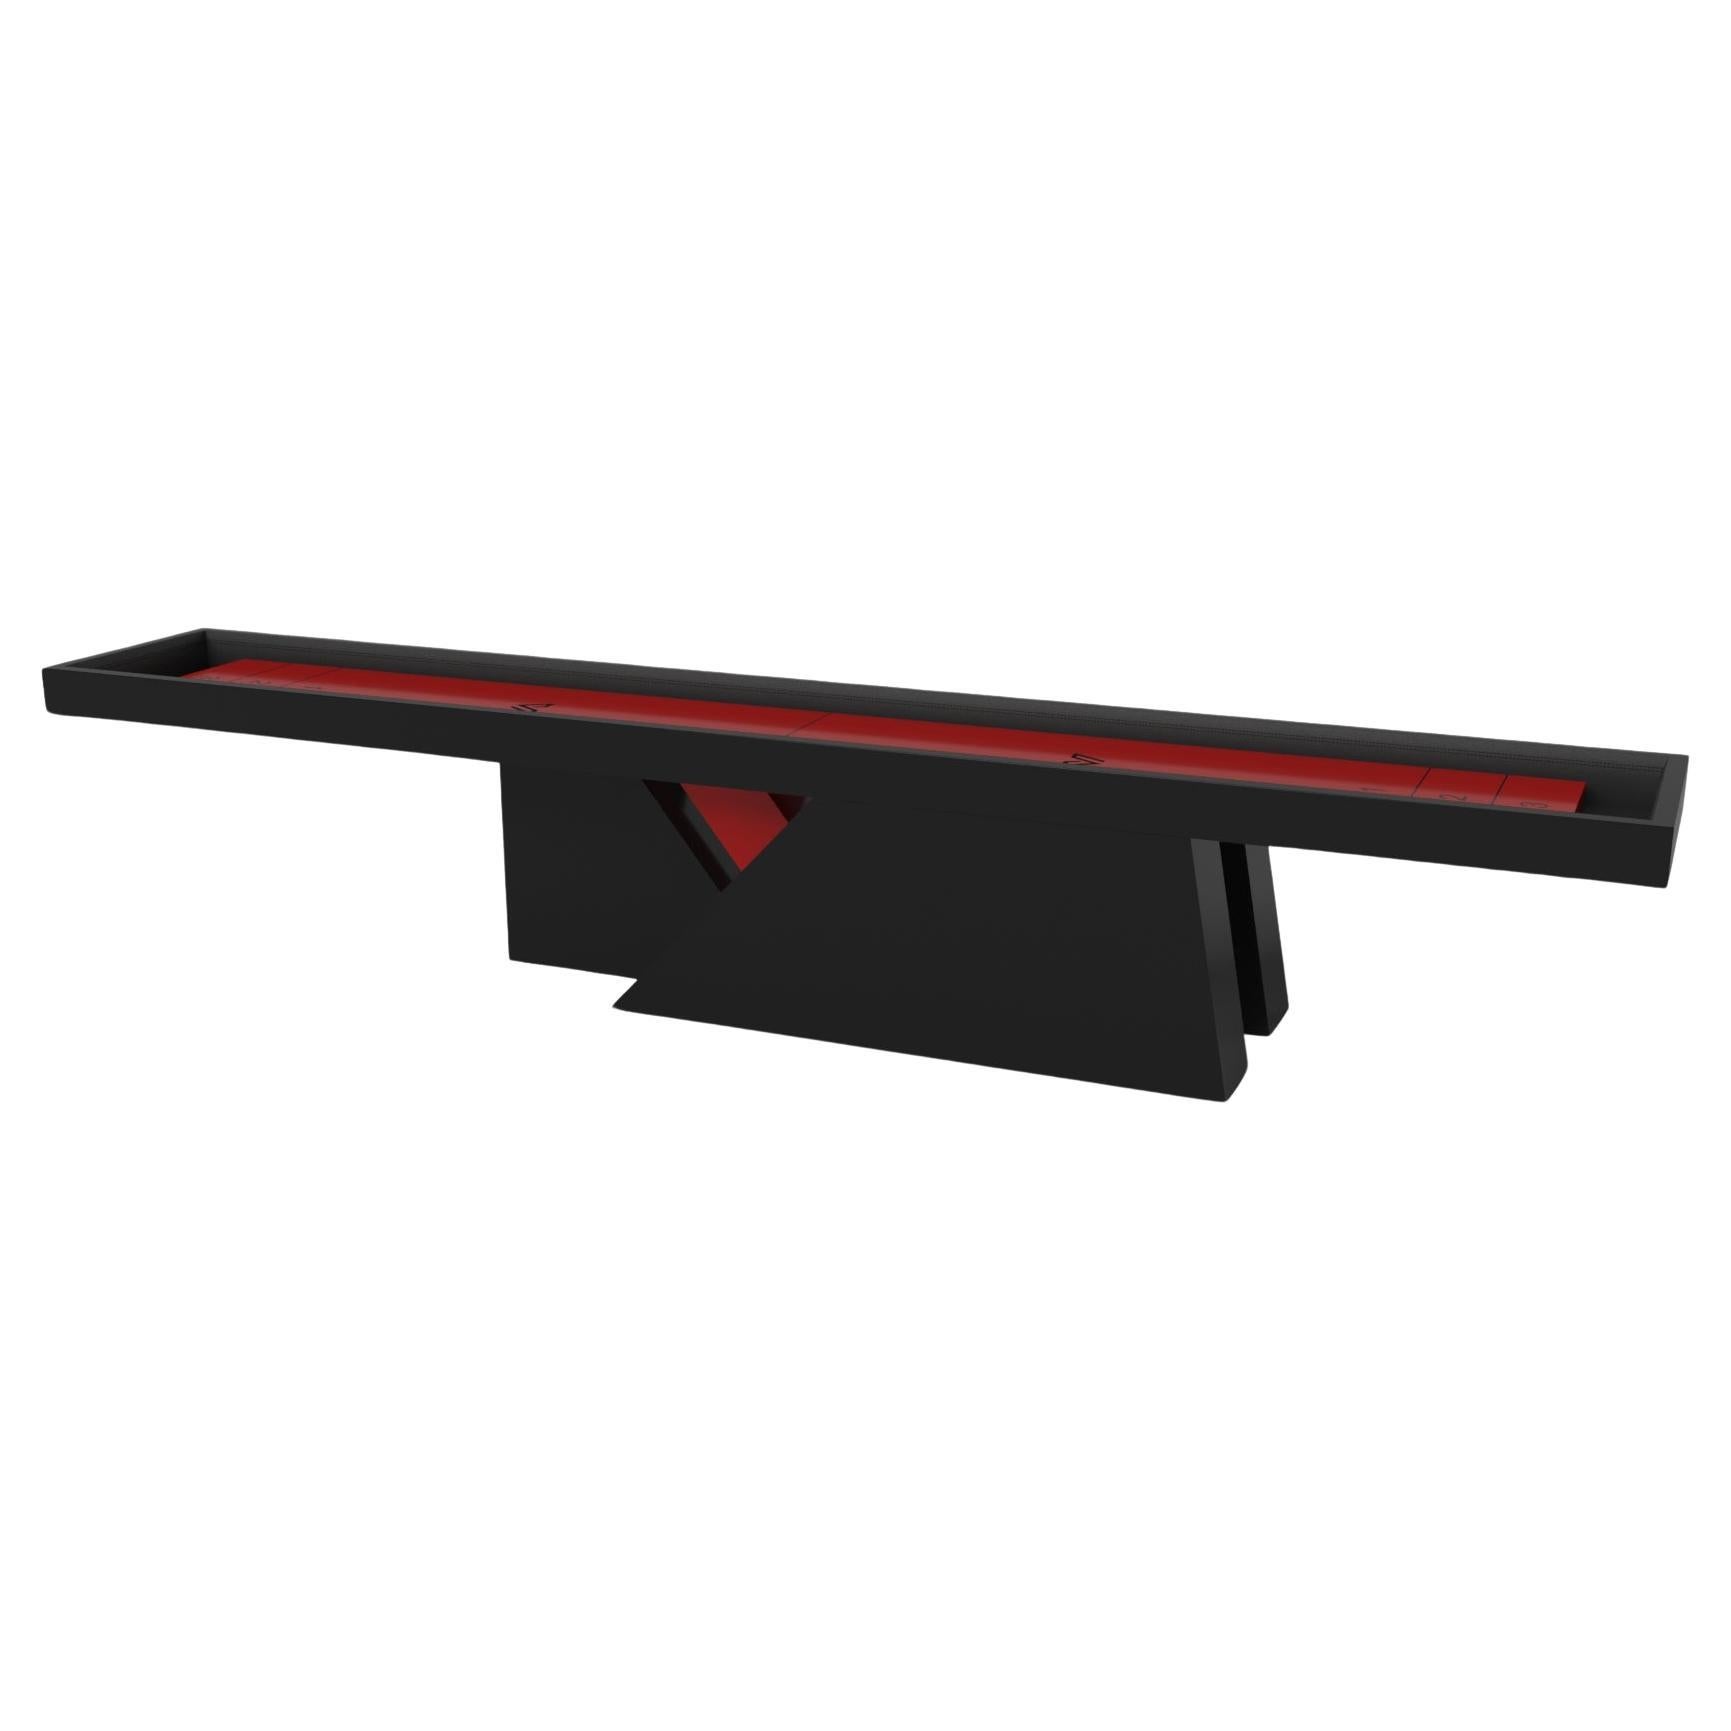 Elevate Customs Stilt Shuffleboard Tables /Solid Pantone Black Color in 14' -USA